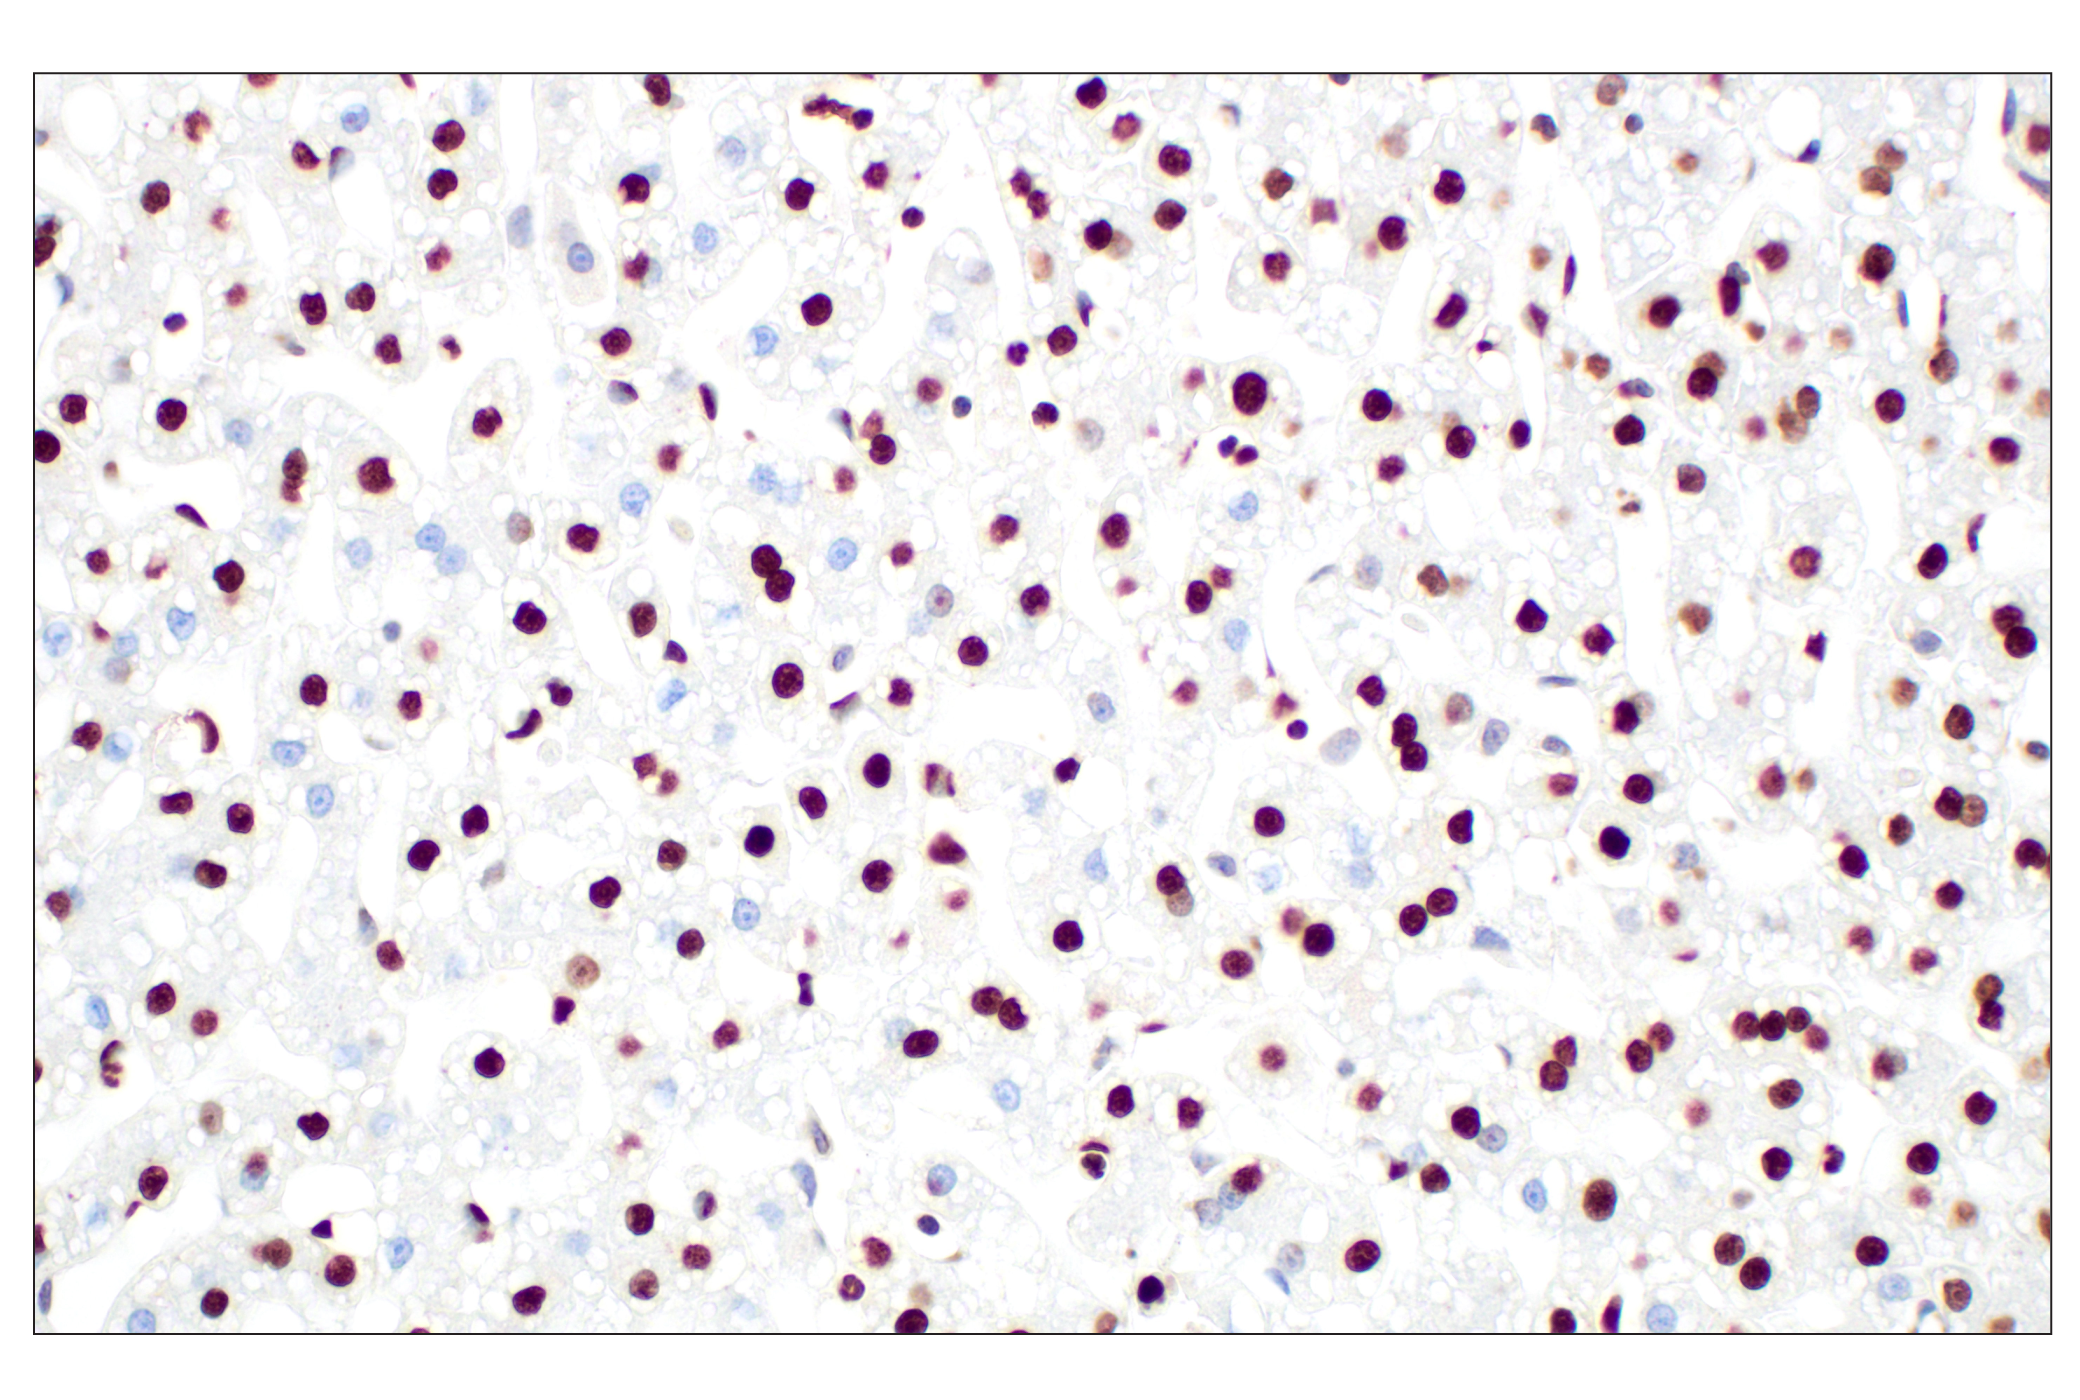  Image 23: Phospho-Histone H3 (Mitotic Marker) Antibody Sampler Kit